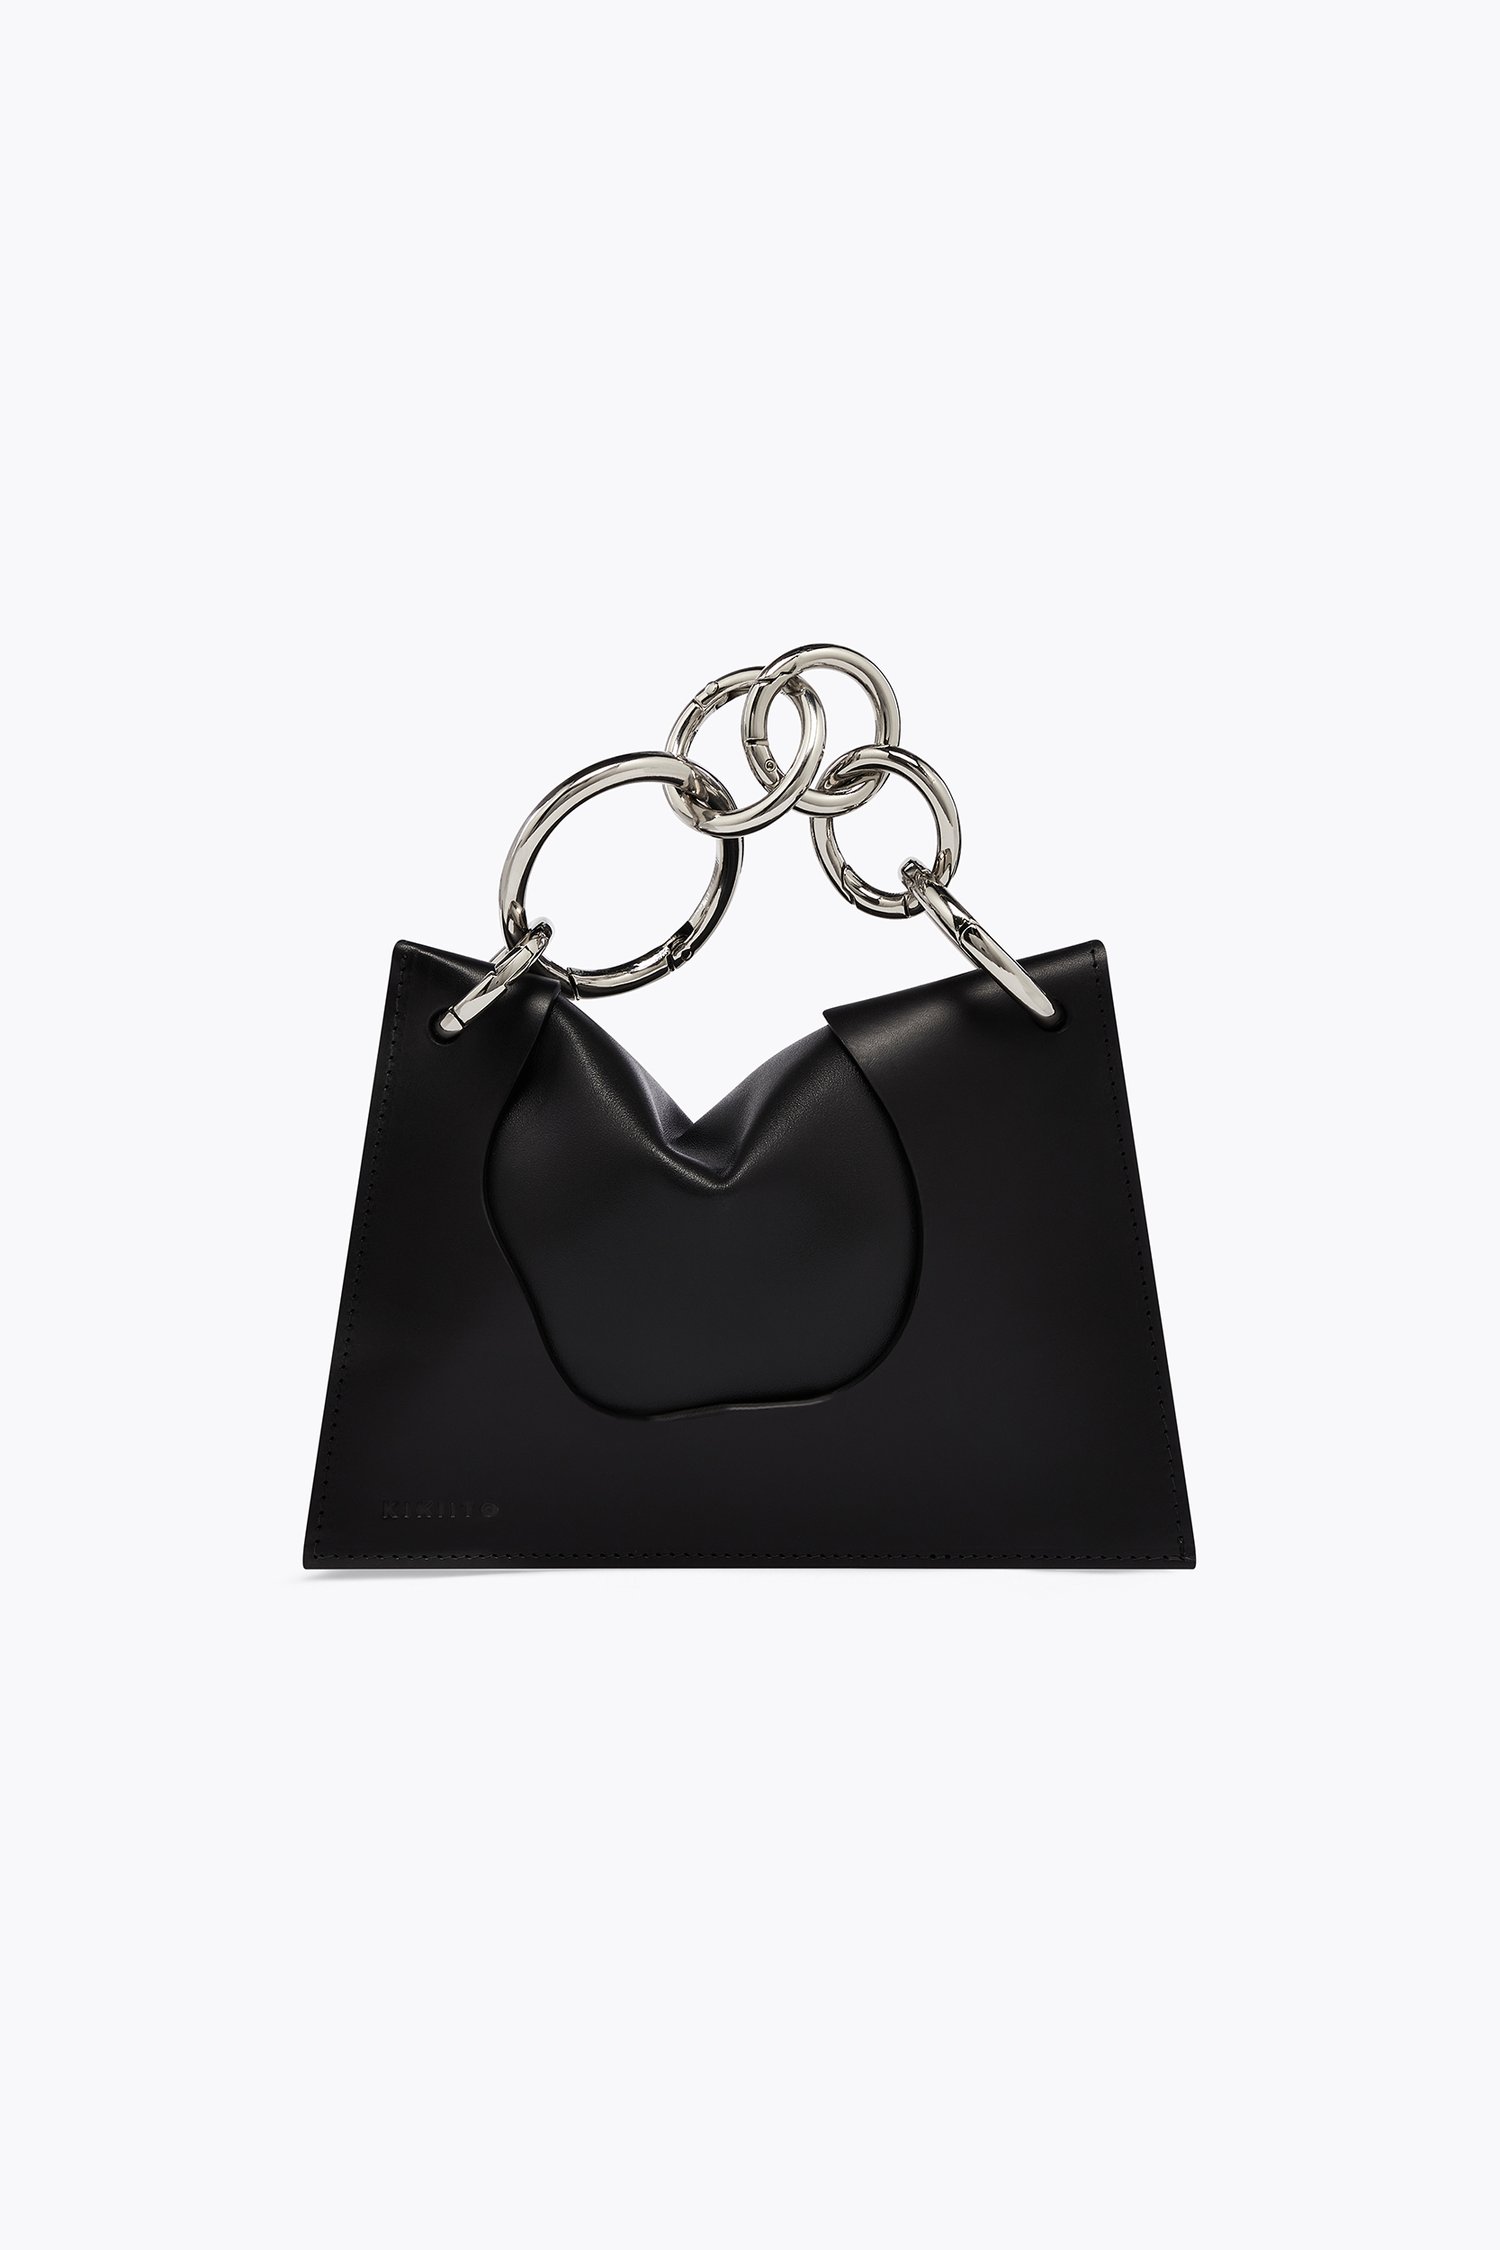 OTO Handbag - Black Leather — KIKIITO